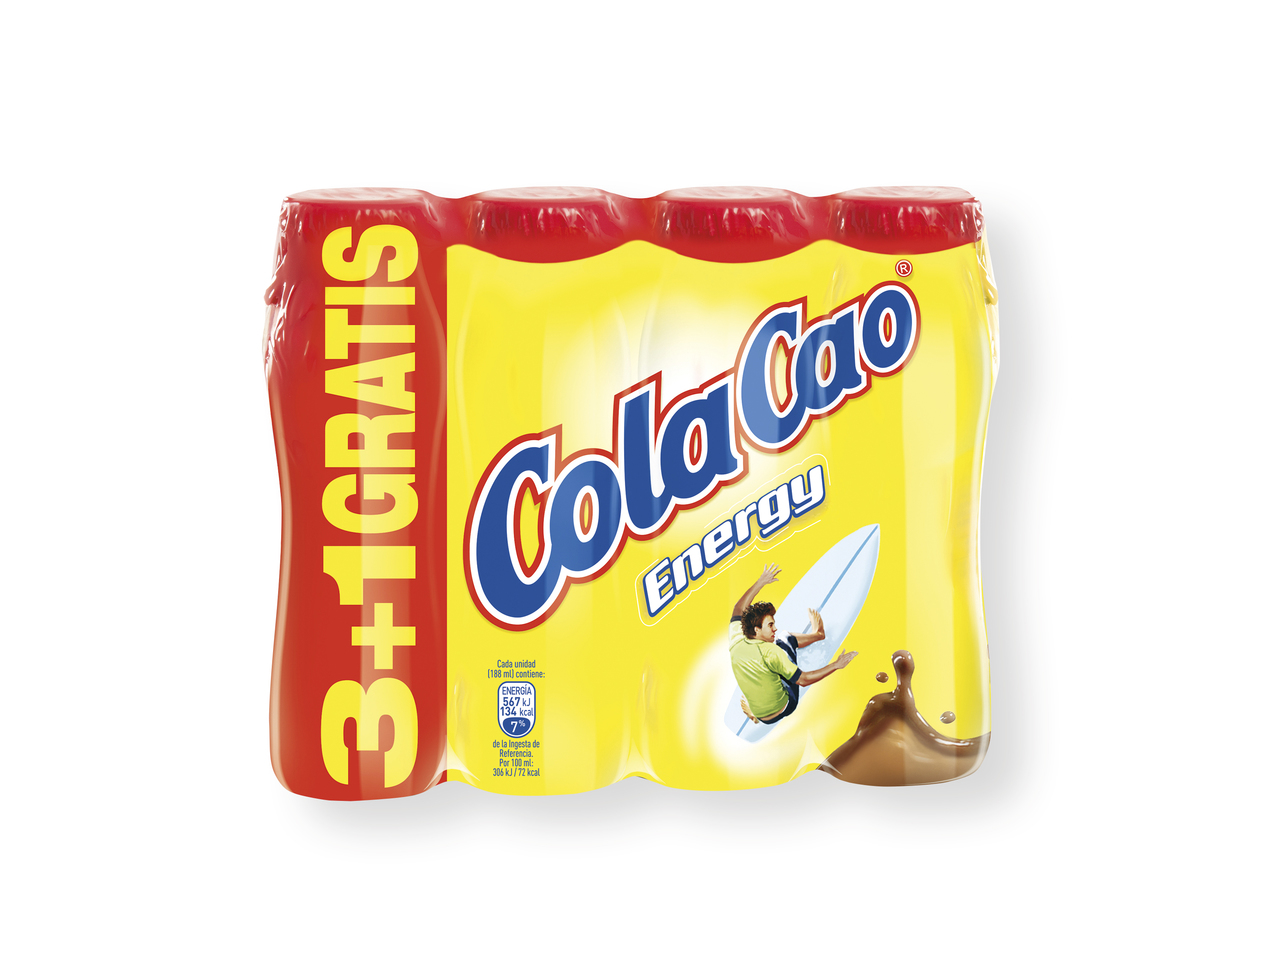 'Cola Cao(R)' Cola Cao energy